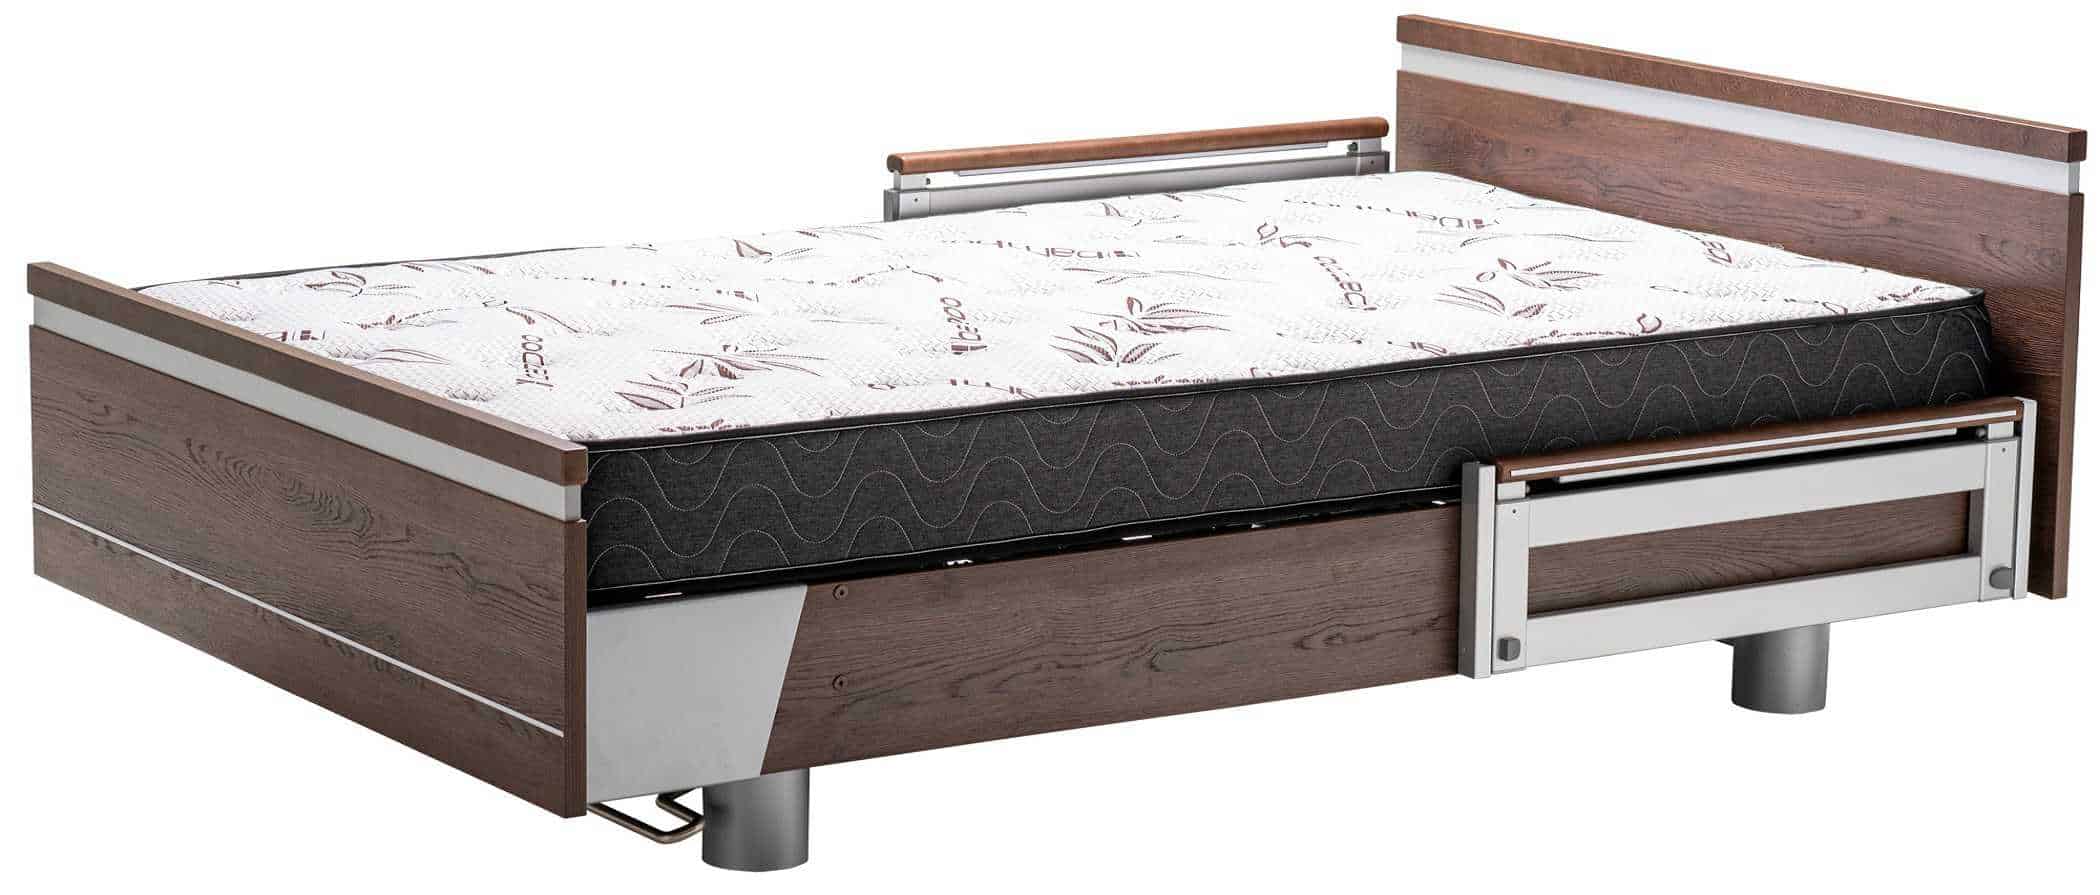 Nexus Rota Pro Bario 100cm wide Hospital Bed - Free Delivery